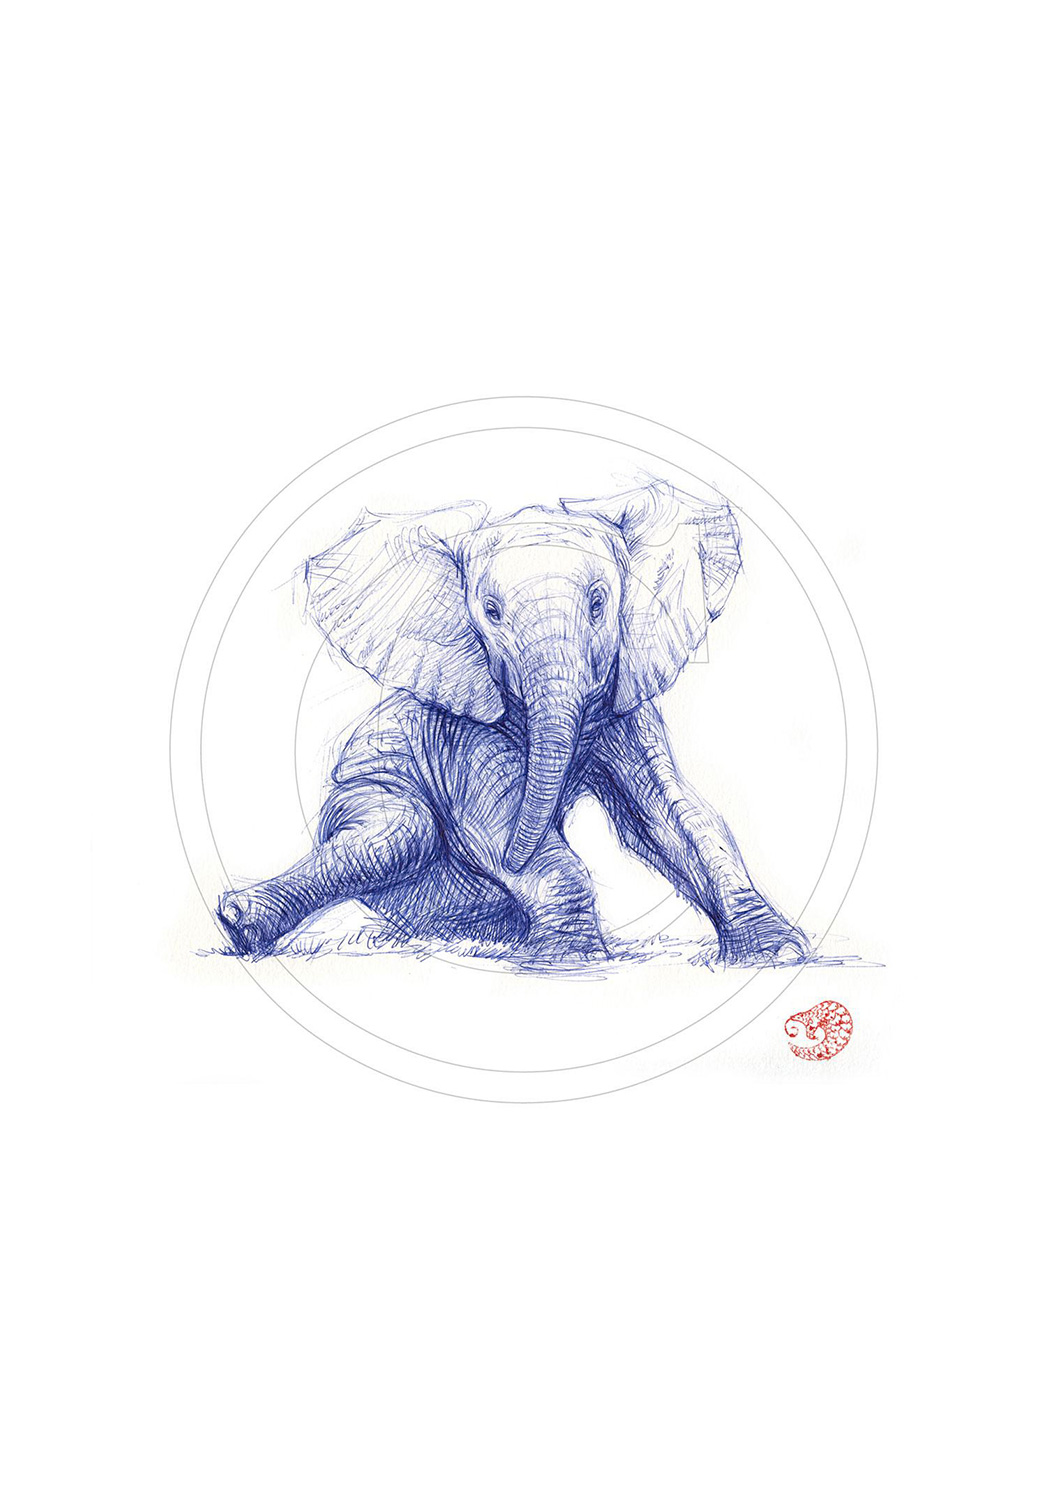 Marcello-art: Wish Card 292 - Baby elephant sitting